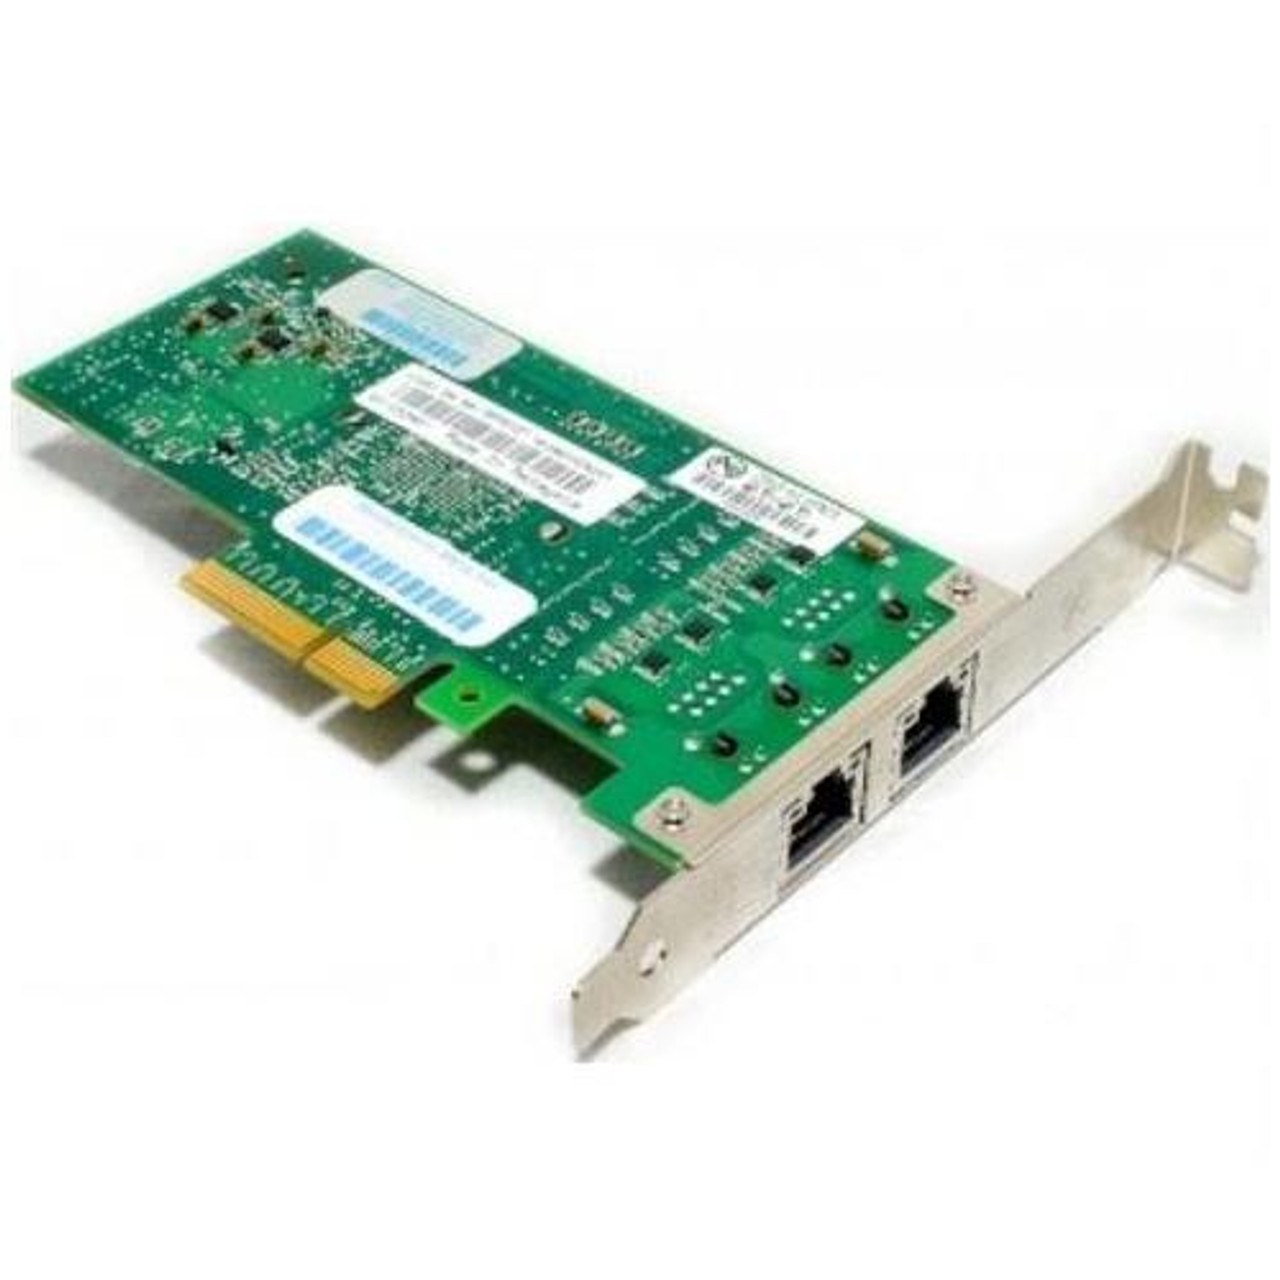 6002495 Gateway 802.11a/b/g Wireless LAN Dual Mode mini PCI Adapter Card for 200ARC 400VTX Notebooks